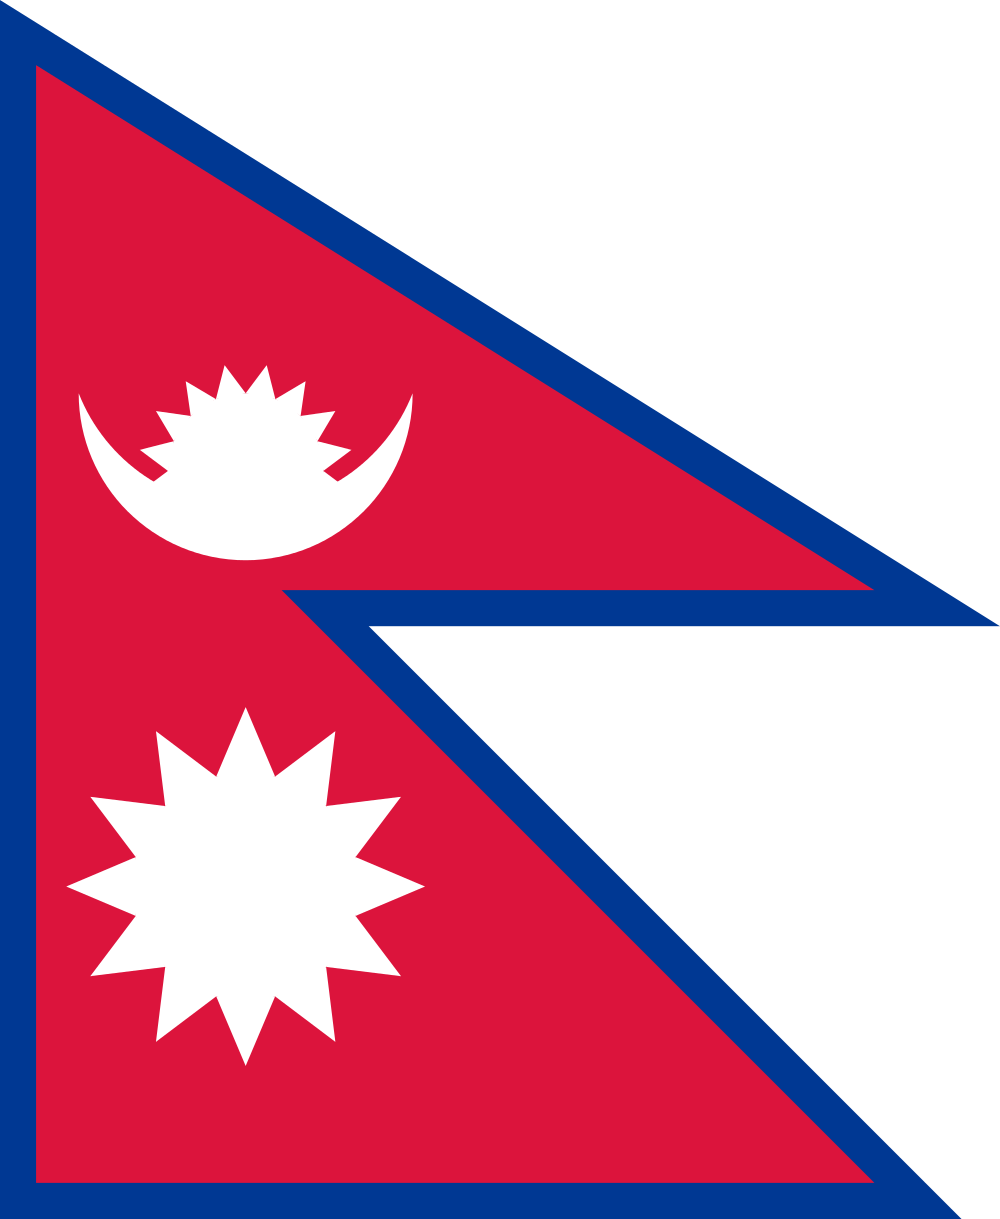 Constitution of Nepal 2072 (2015)